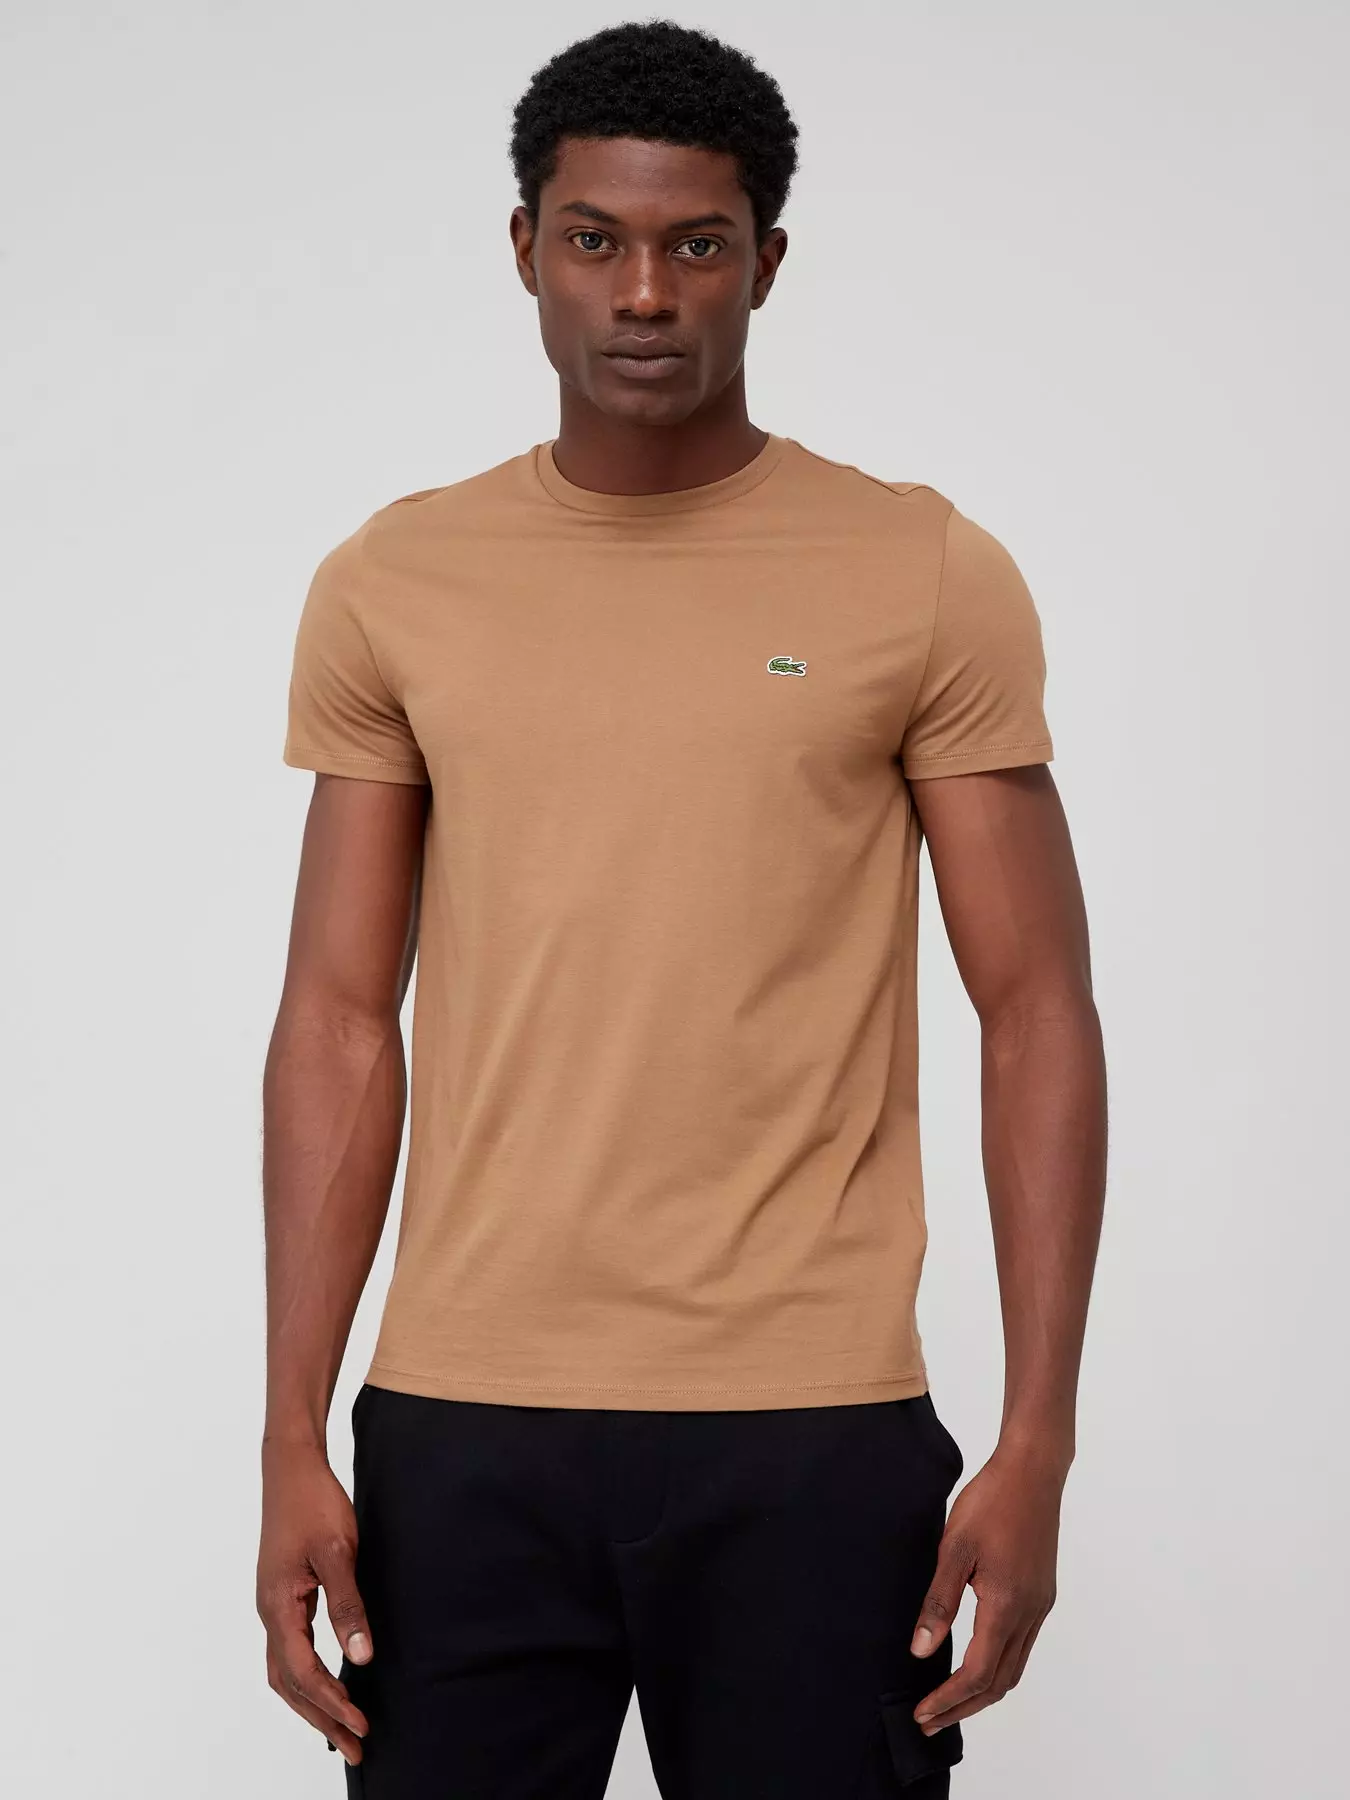 Men's Lacoste T-Shirts | Shirts | Very.co.uk